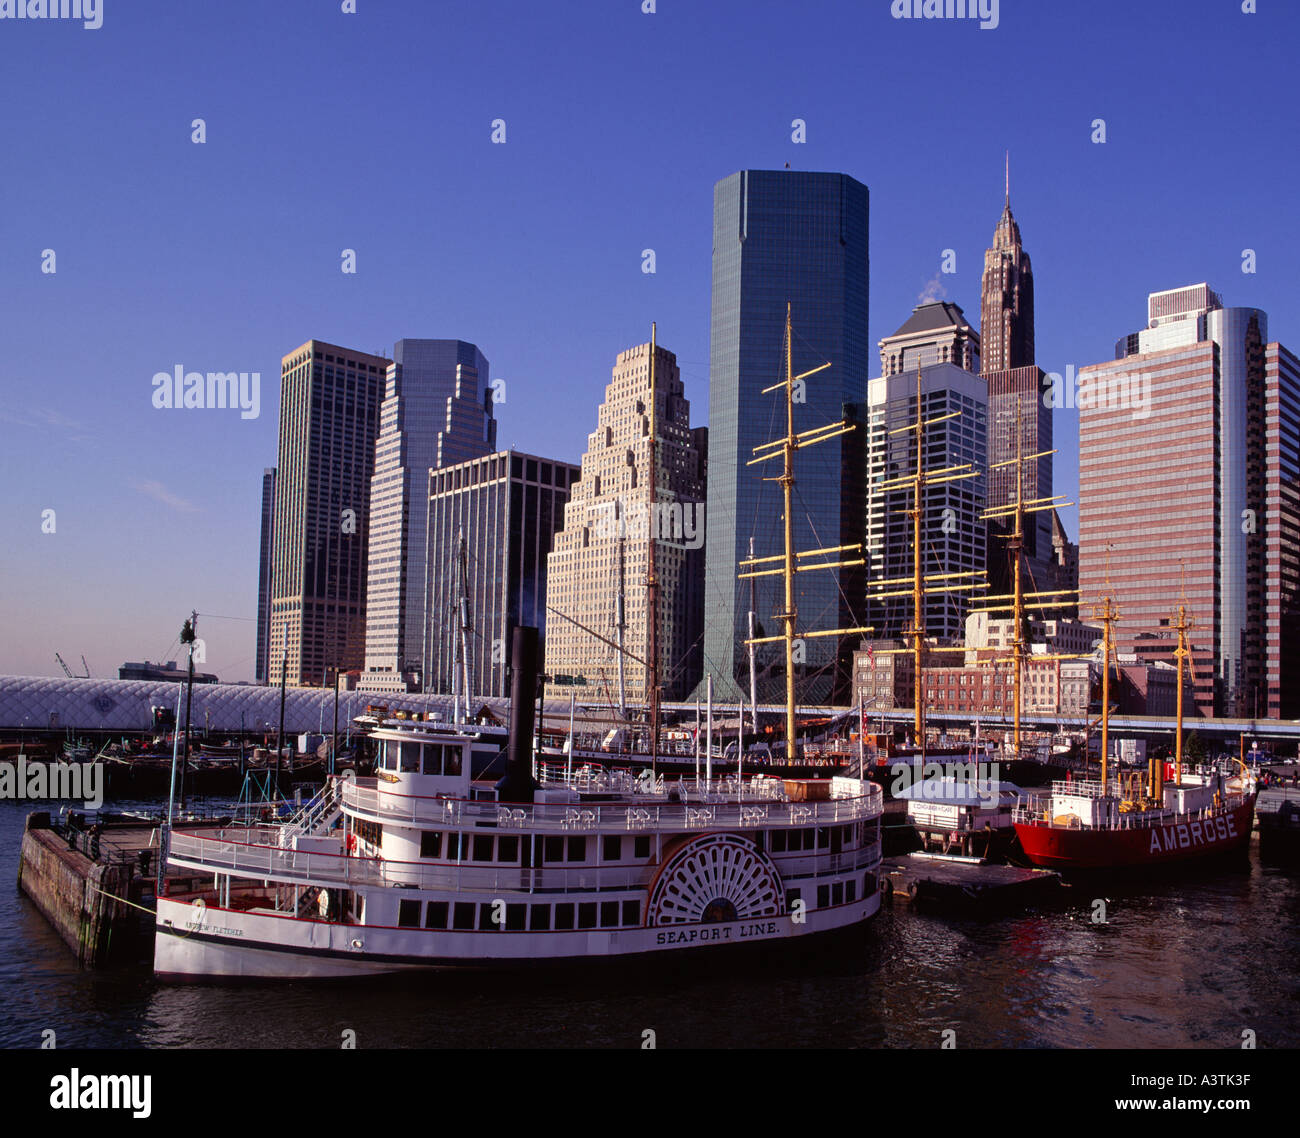 South Street Sea Port, Manhattan, New York, USA Banque D'Images